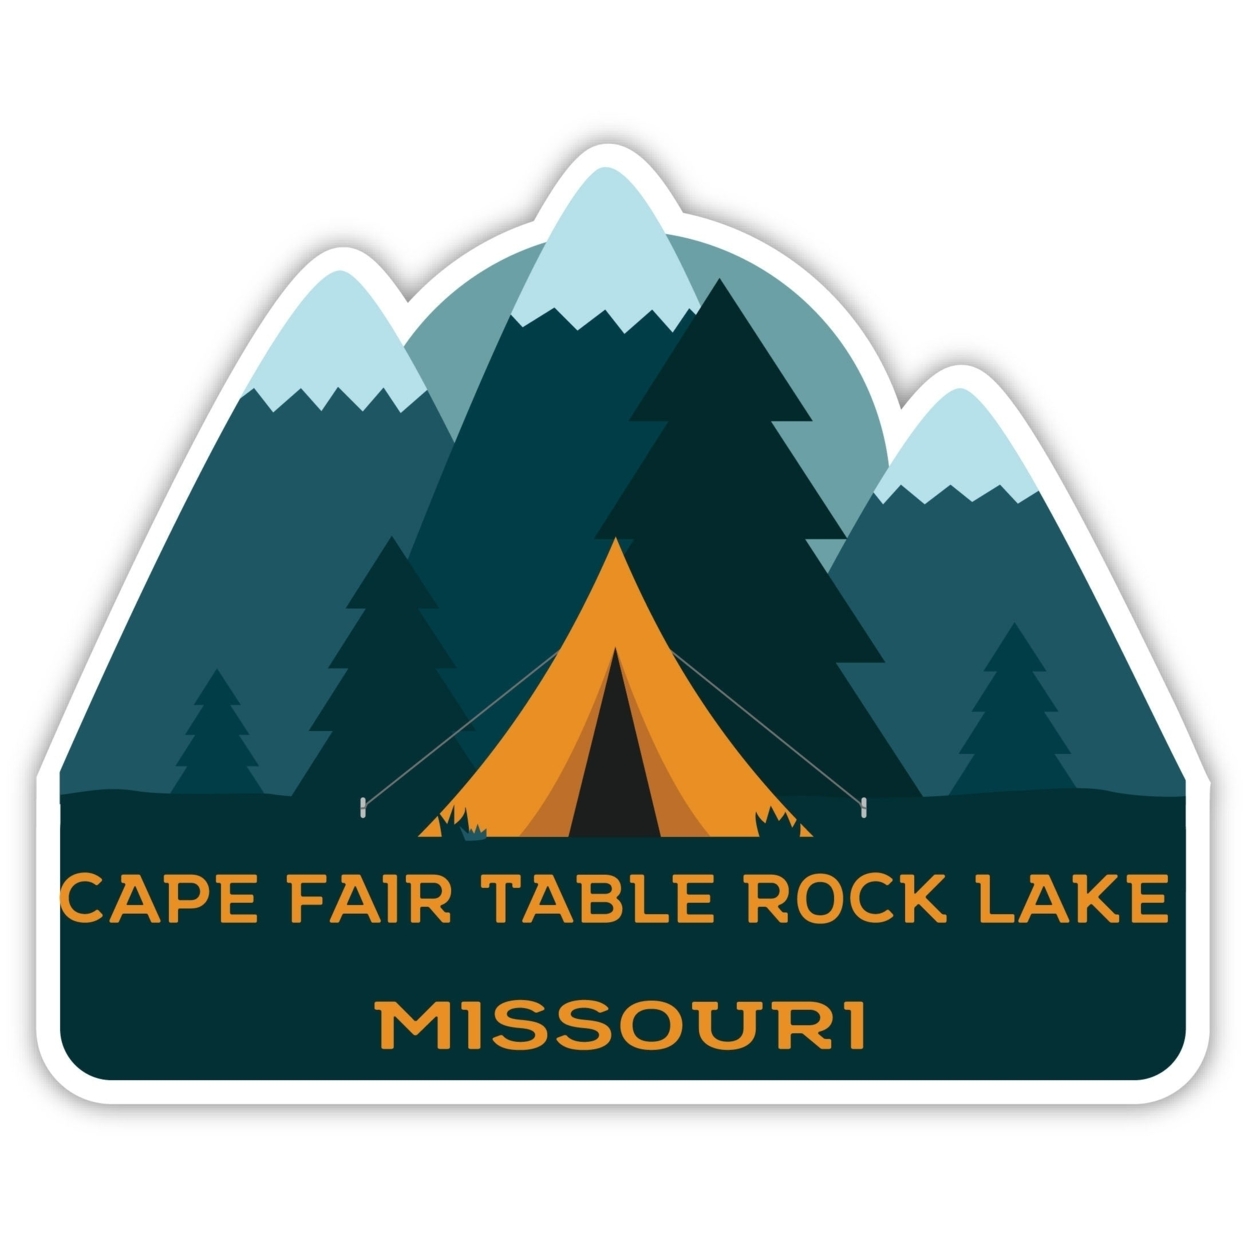 Cape Fair Table Rock Lake Missouri Souvenir Decorative Stickers (Choose Theme And Size) - 4-Pack, 10-Inch, Tent